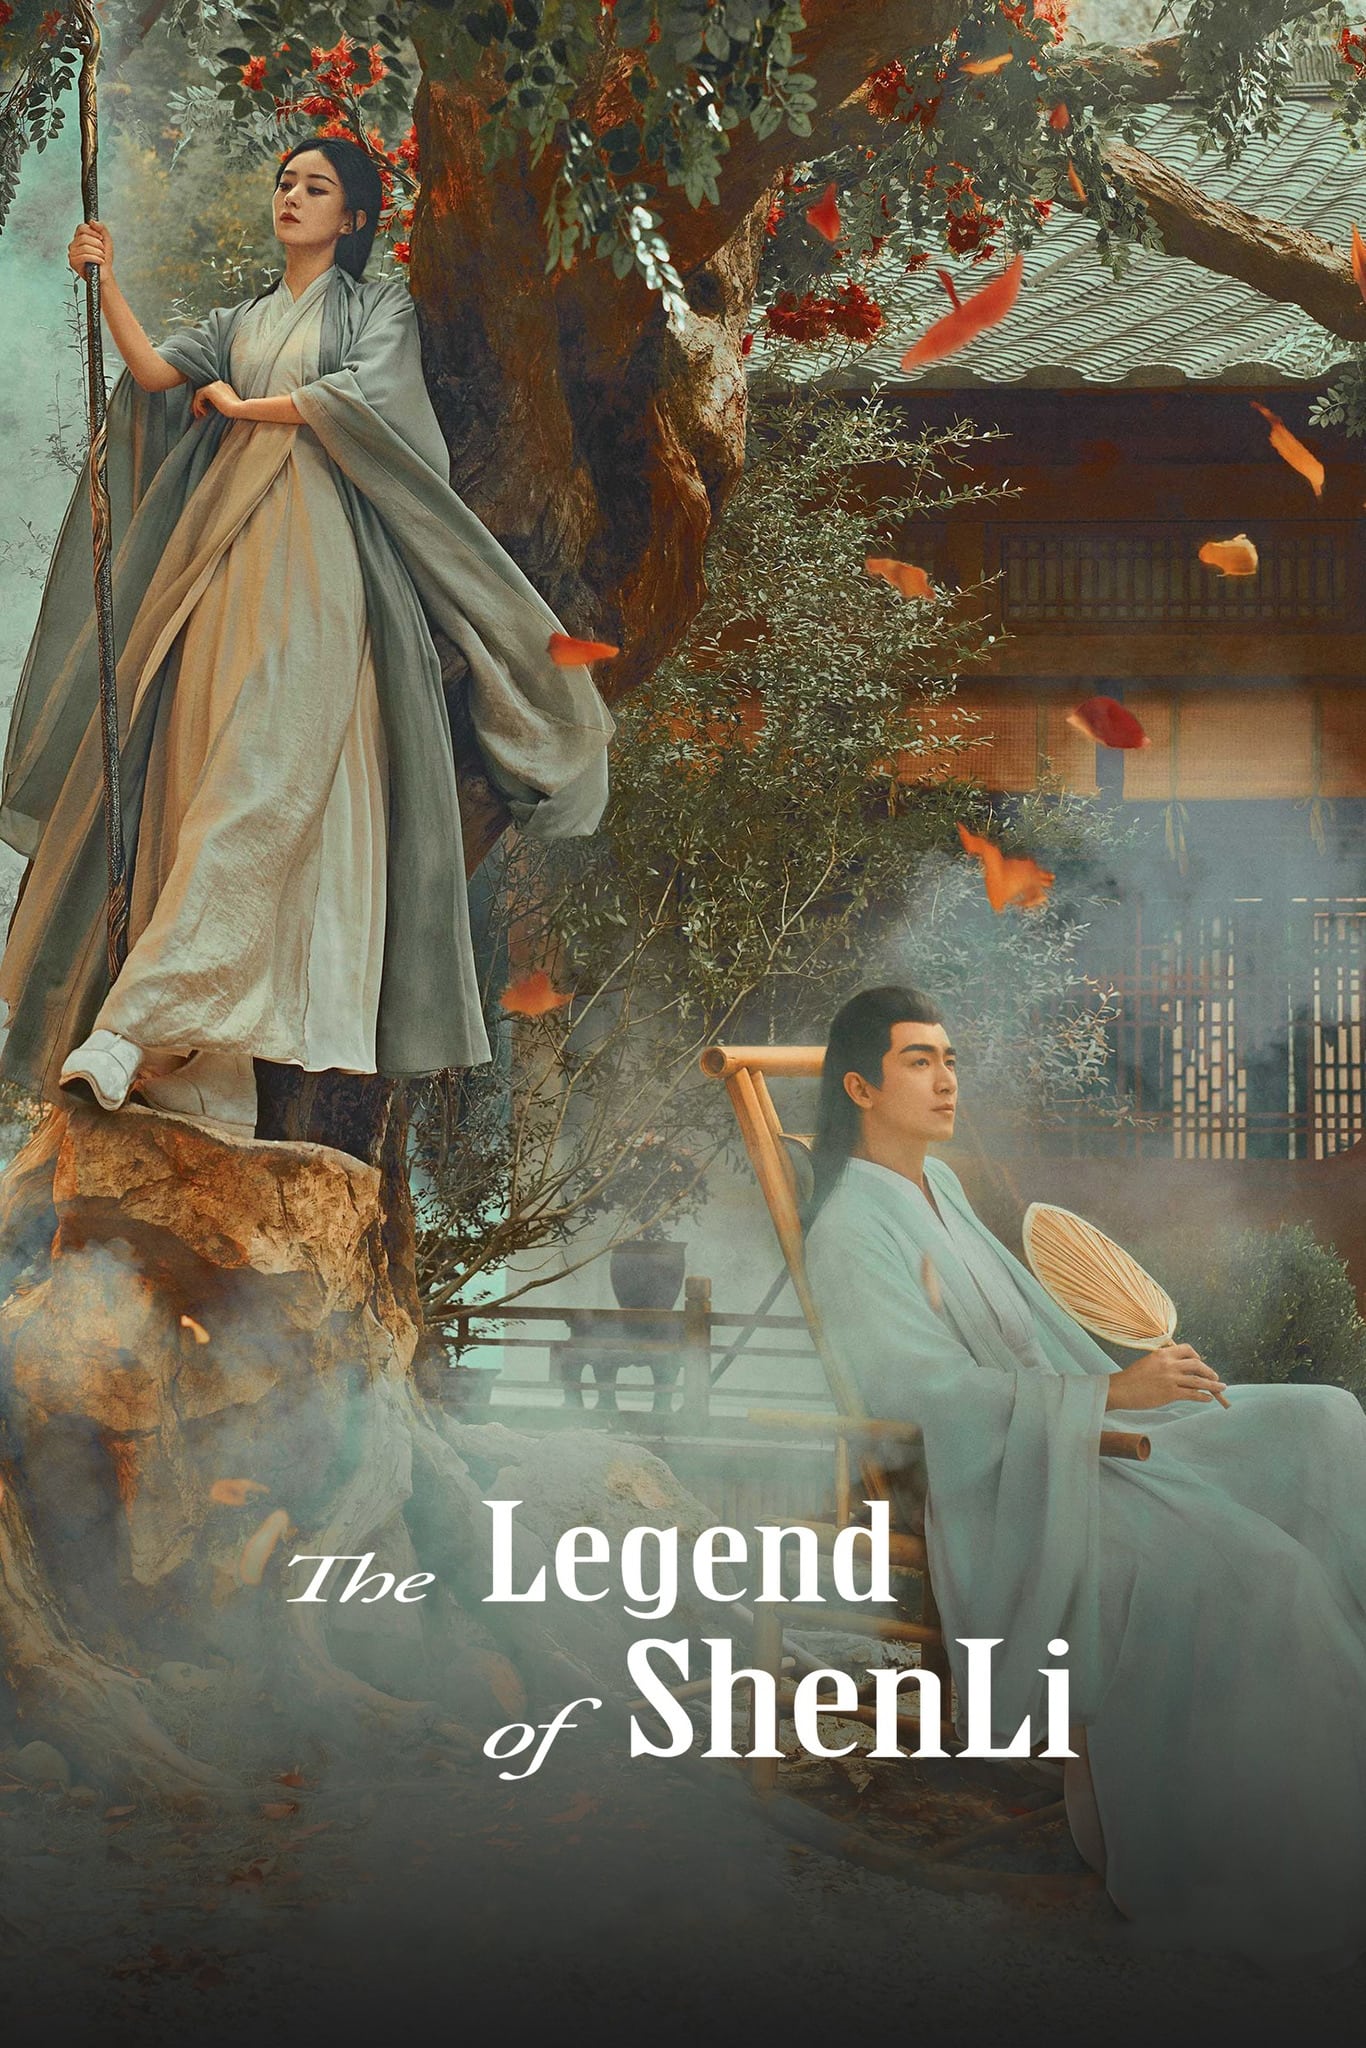 The Legend of Shen Li